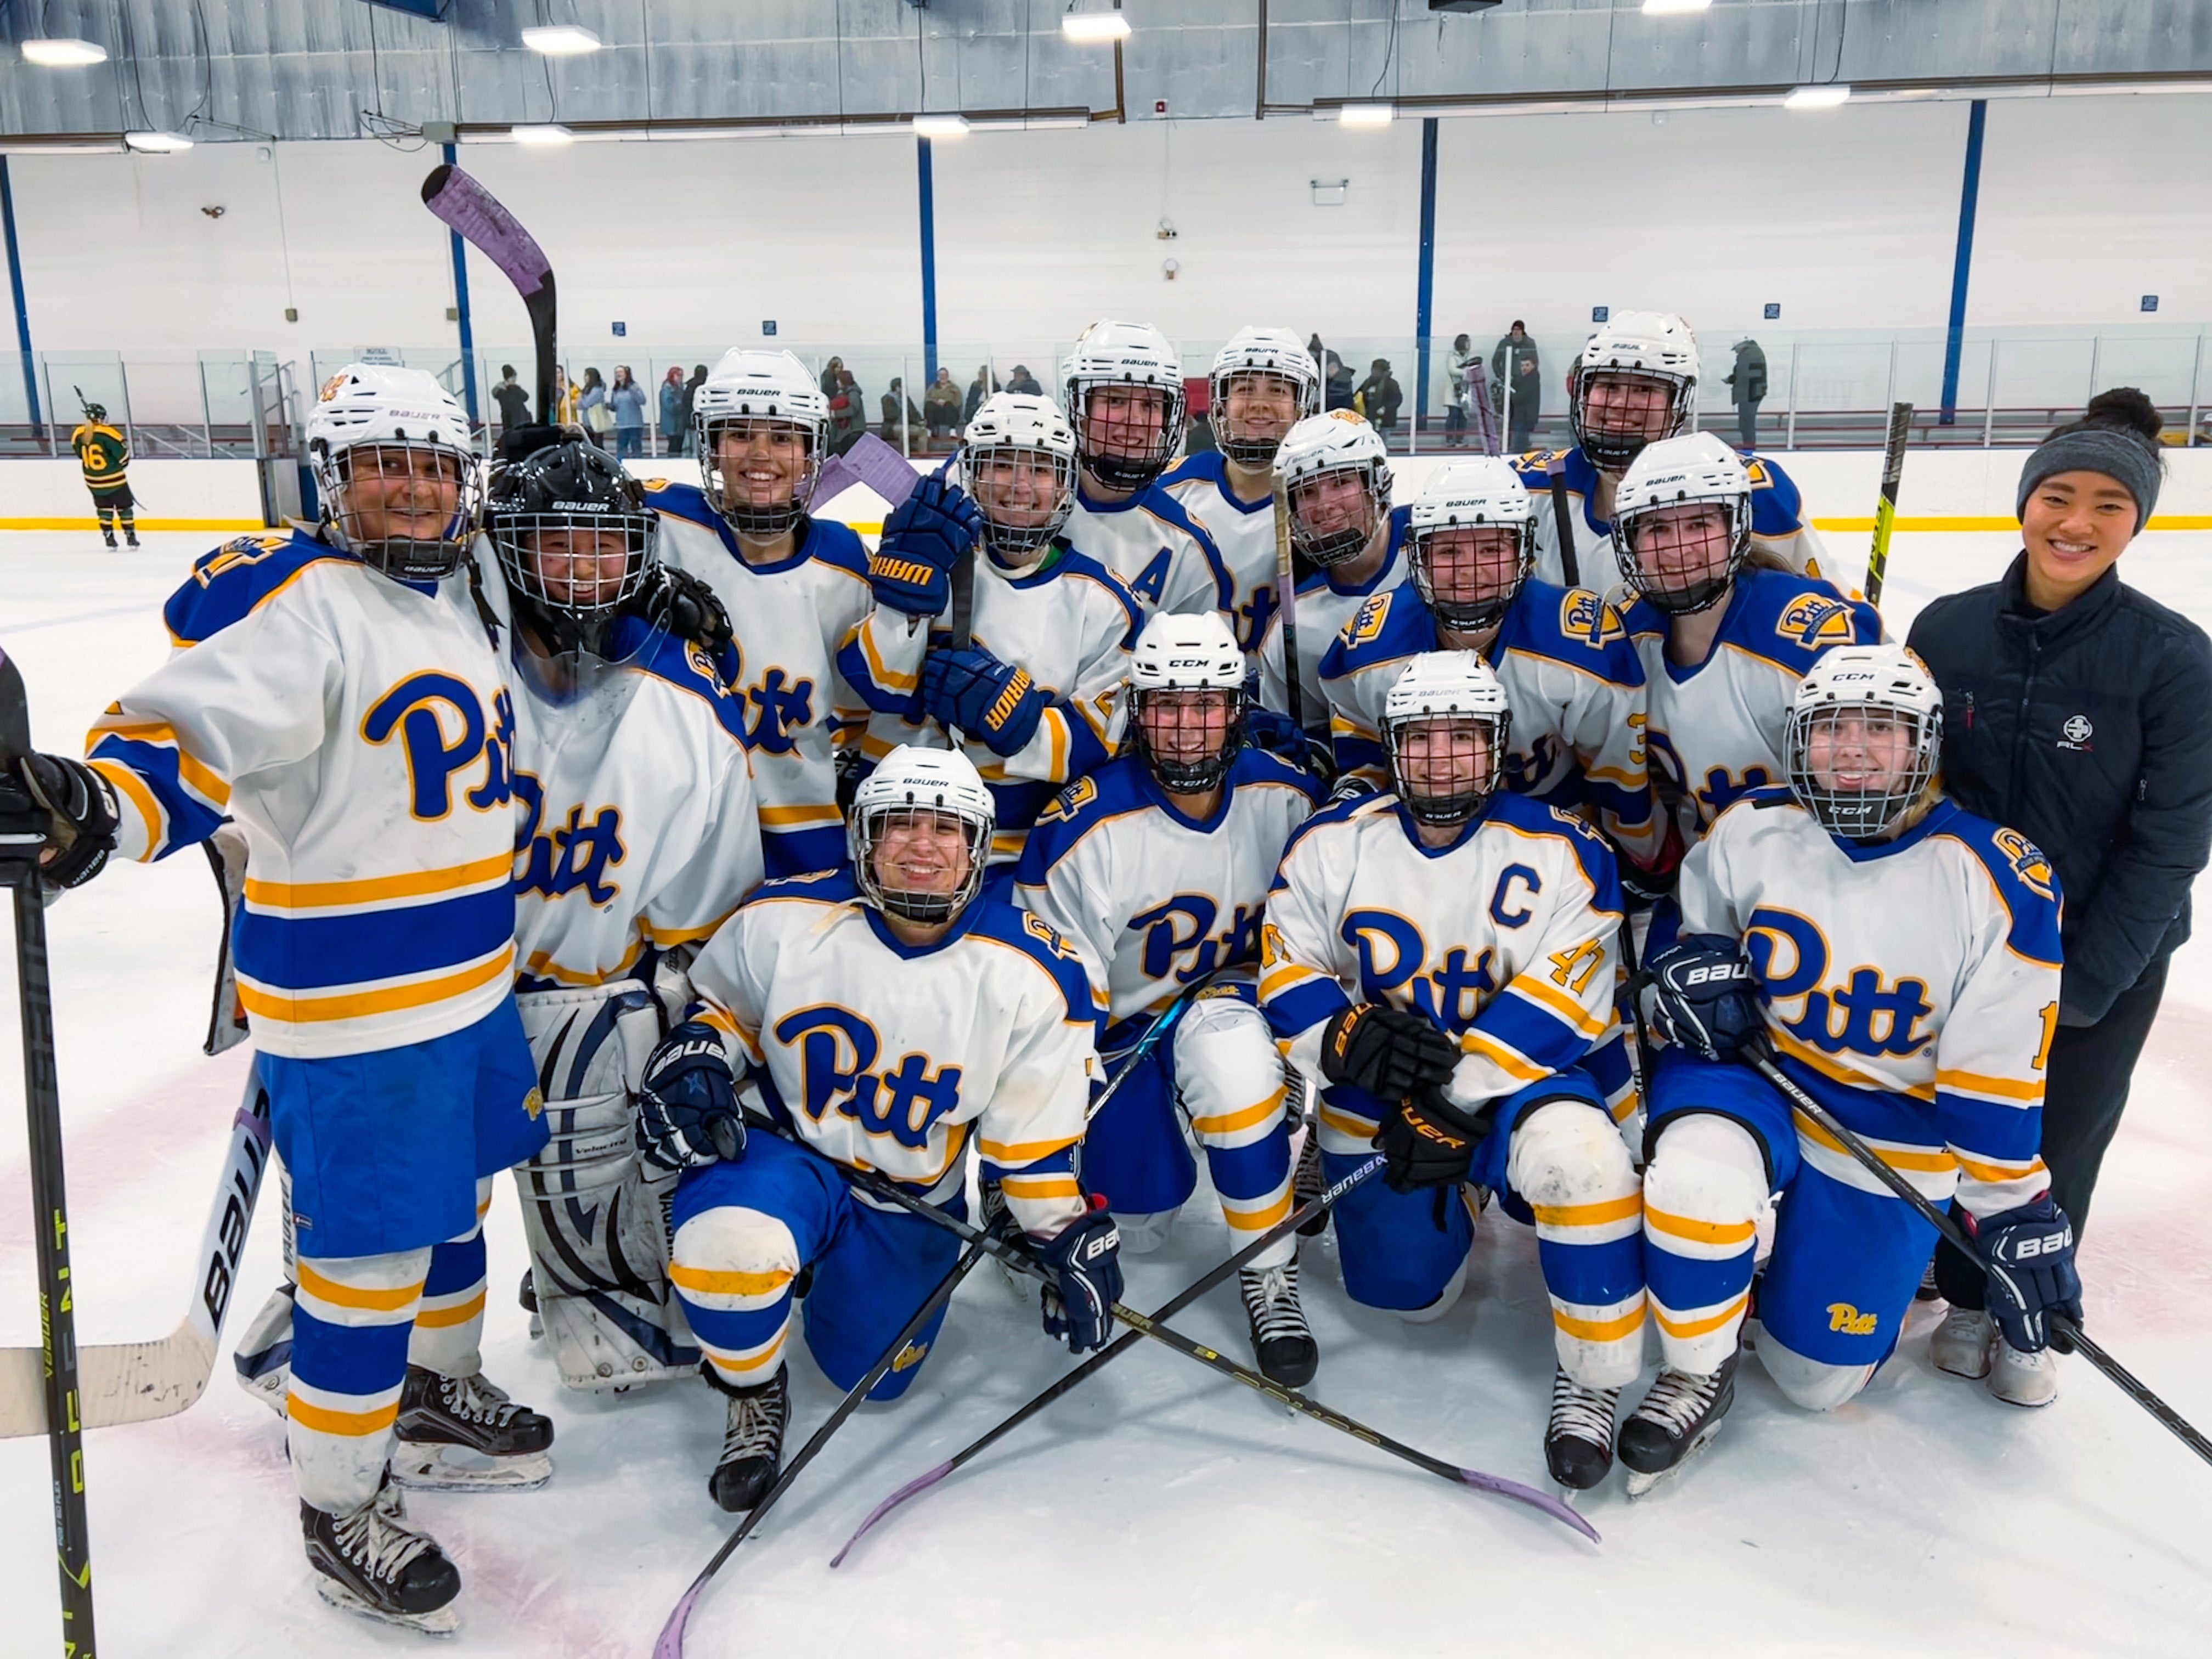 Flynn (far right) and the Pitt women’s ice hockey team celebrating a 4-3 overtime win against Brockport